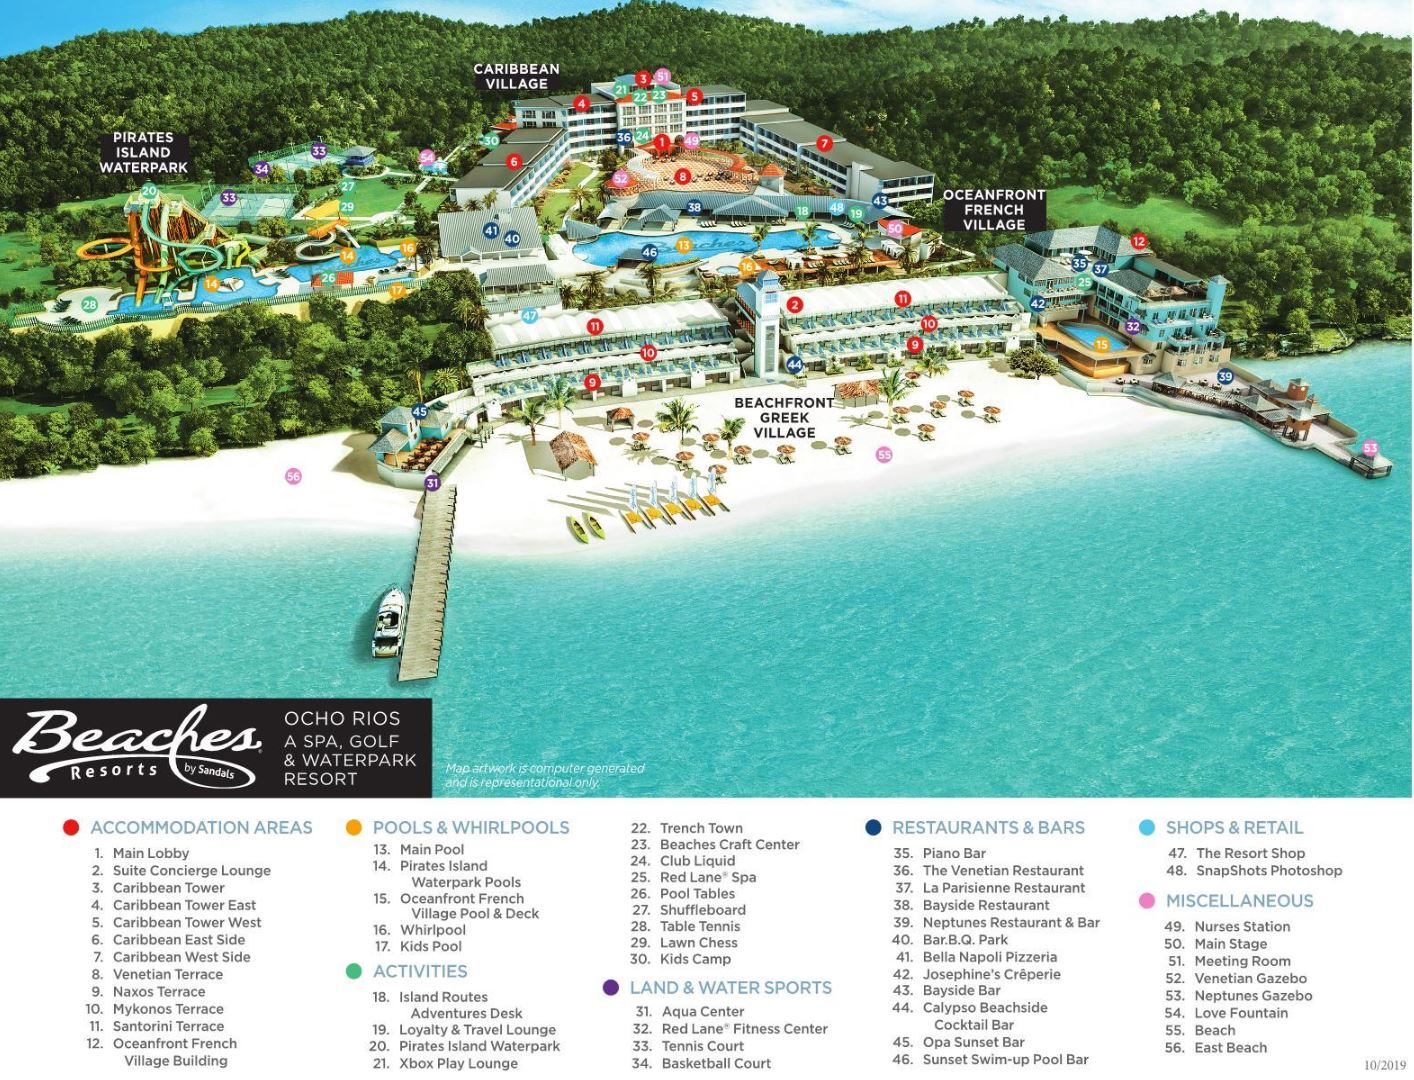 Resort Map Beaches Ocho Rios Resort Golf Club Ocho Rios Jamaica 95445 Hot Sex Picture